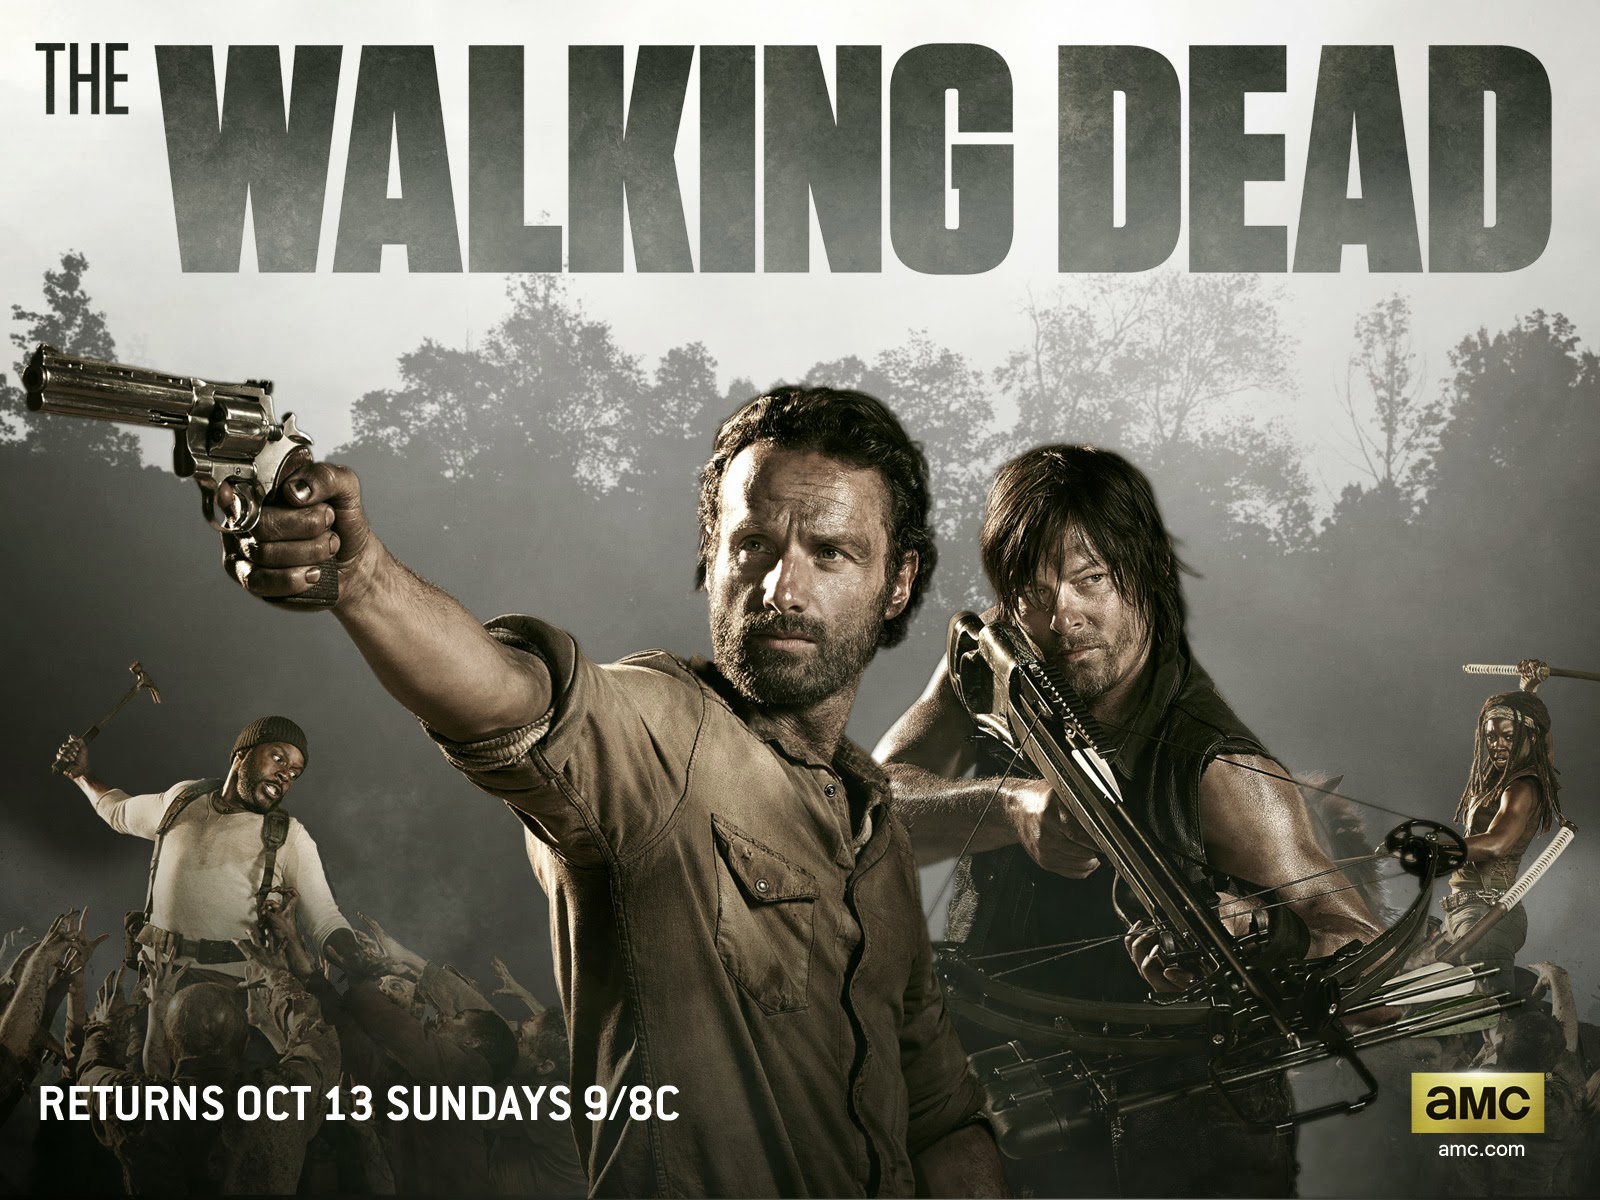  ENTRETENIMENTOAssista The Walking Dead 4 Temporada em AMC TV